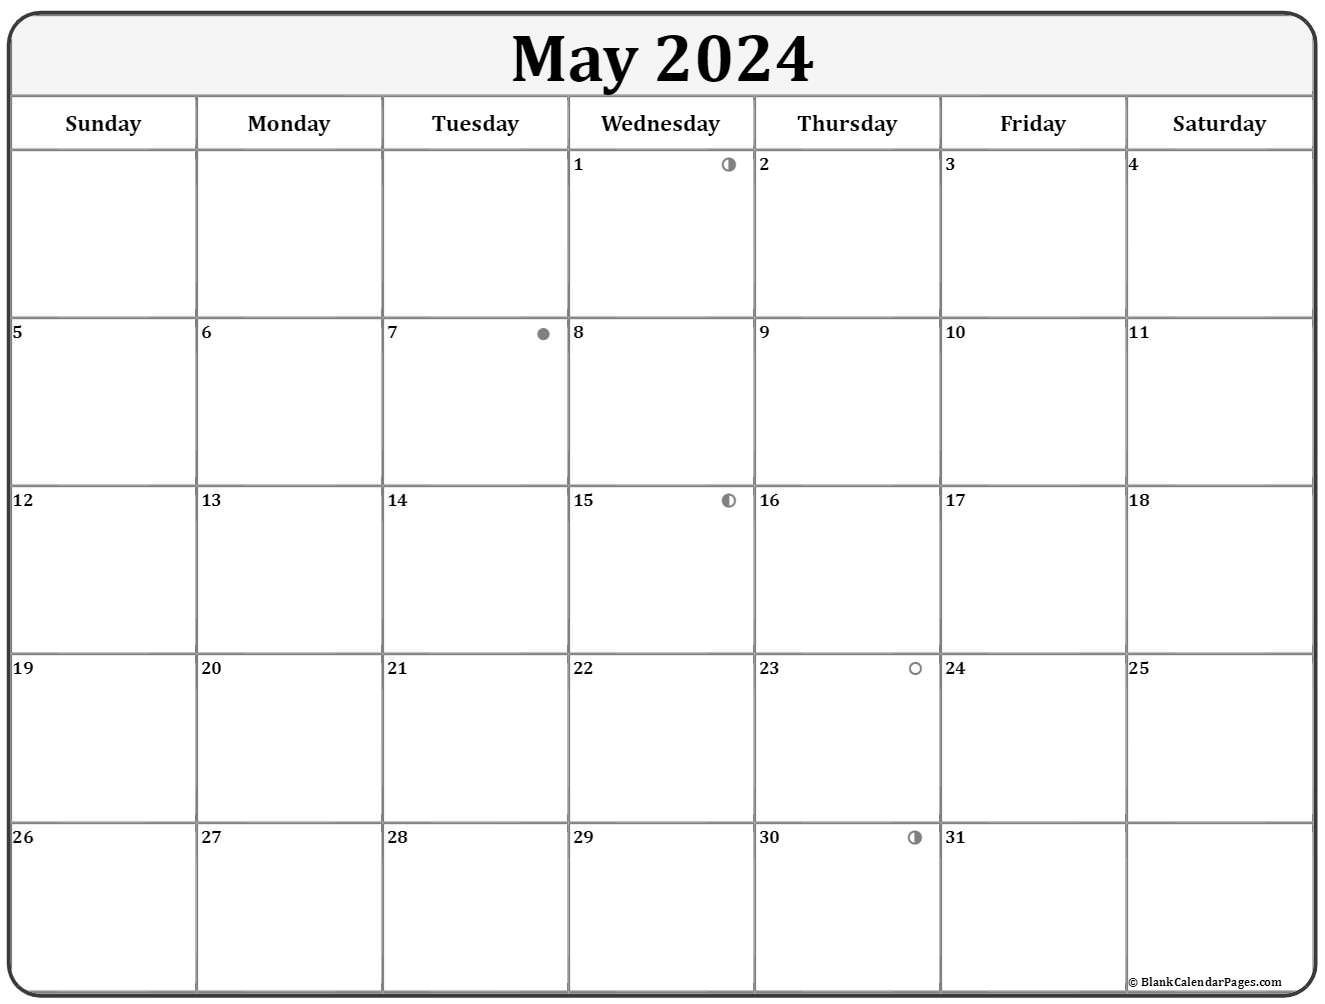 May 2021 Lunar Calendar | Moon Phase Calendar